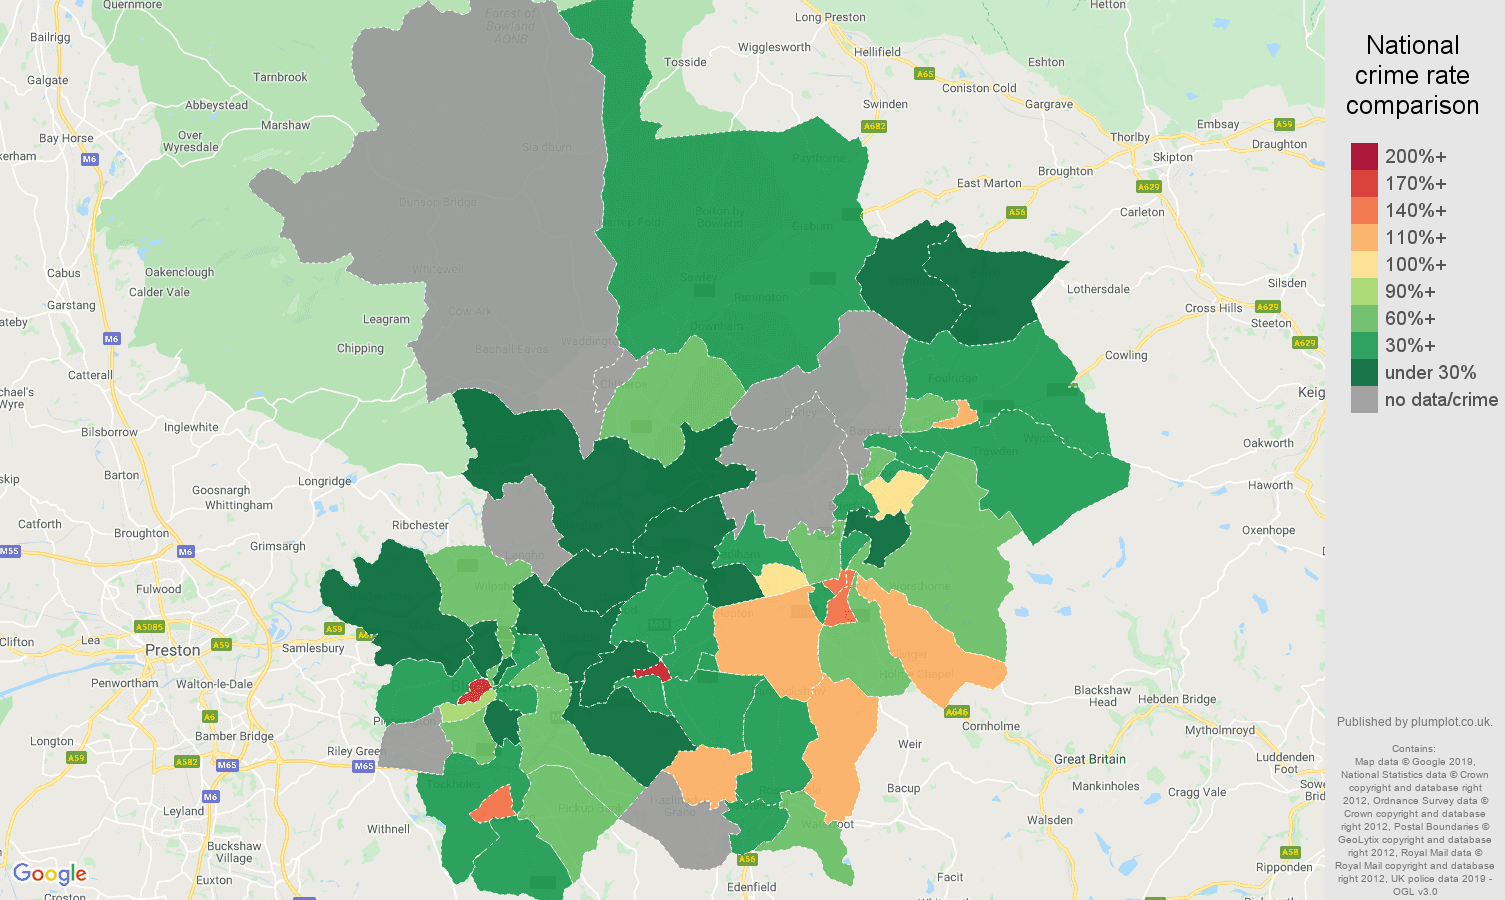 Blackburn possession of weapons crime rate comparison map